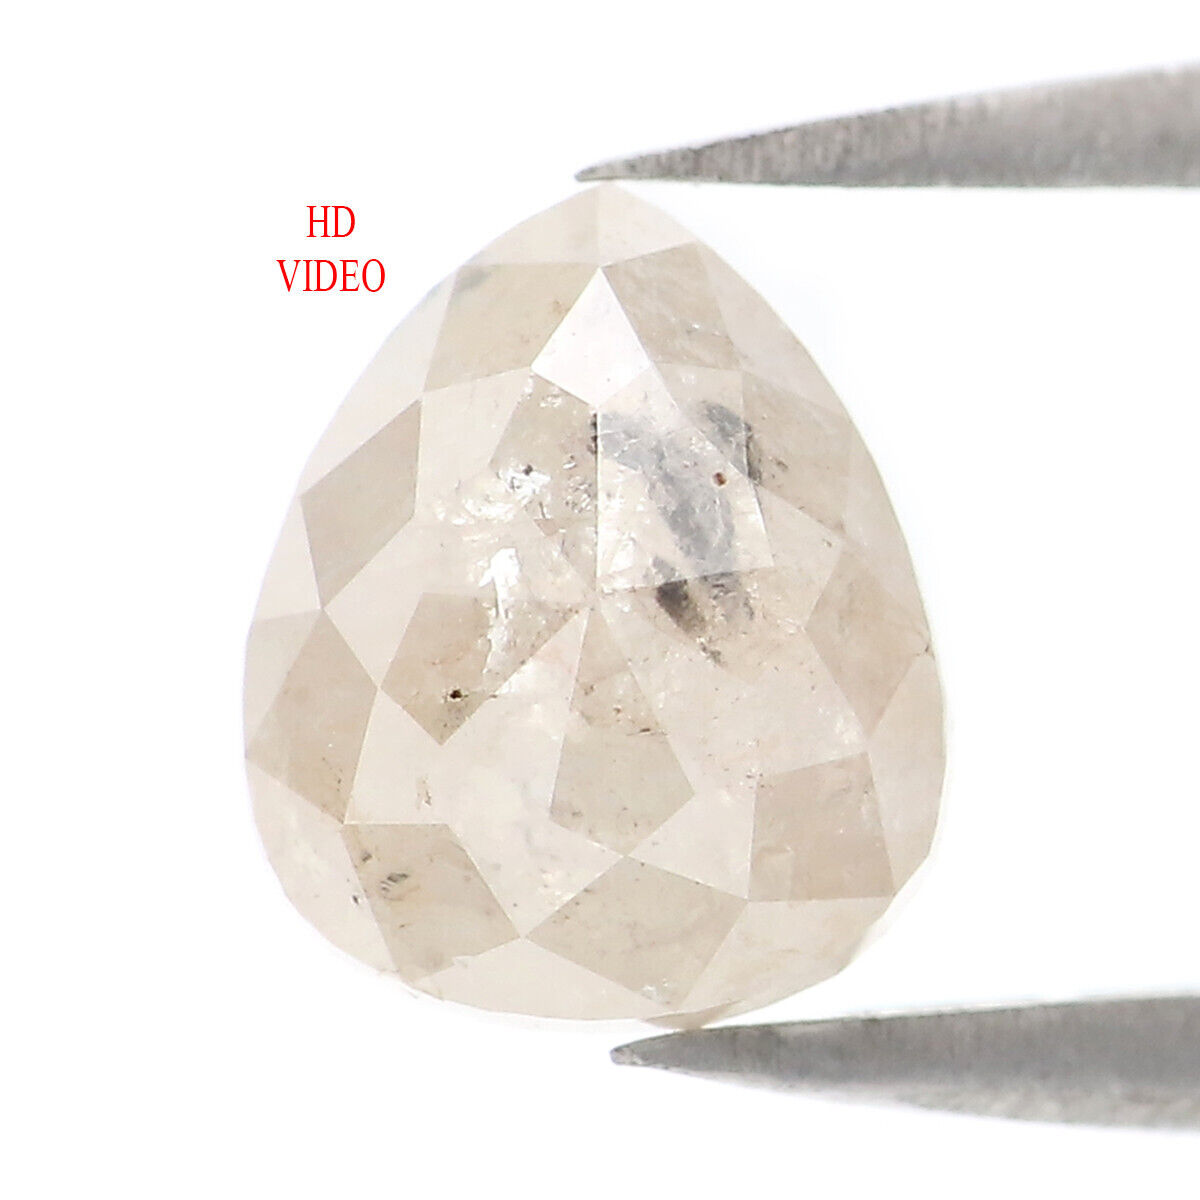 1.68 CT Natural Loose Pear Diamond Grey Color Pear Cut Diamond 7.80  MM Natural Loose Diamond Pear Rose Cut Diamond Pear Shape Diamond QL2119

ETSY : etsy.com/listing/766795…

#PearCutDiamond #GreyDiamond #NaturalDiamond #LooseDiamond #PearDiamond  #DiamondLove #DiamondJewelry